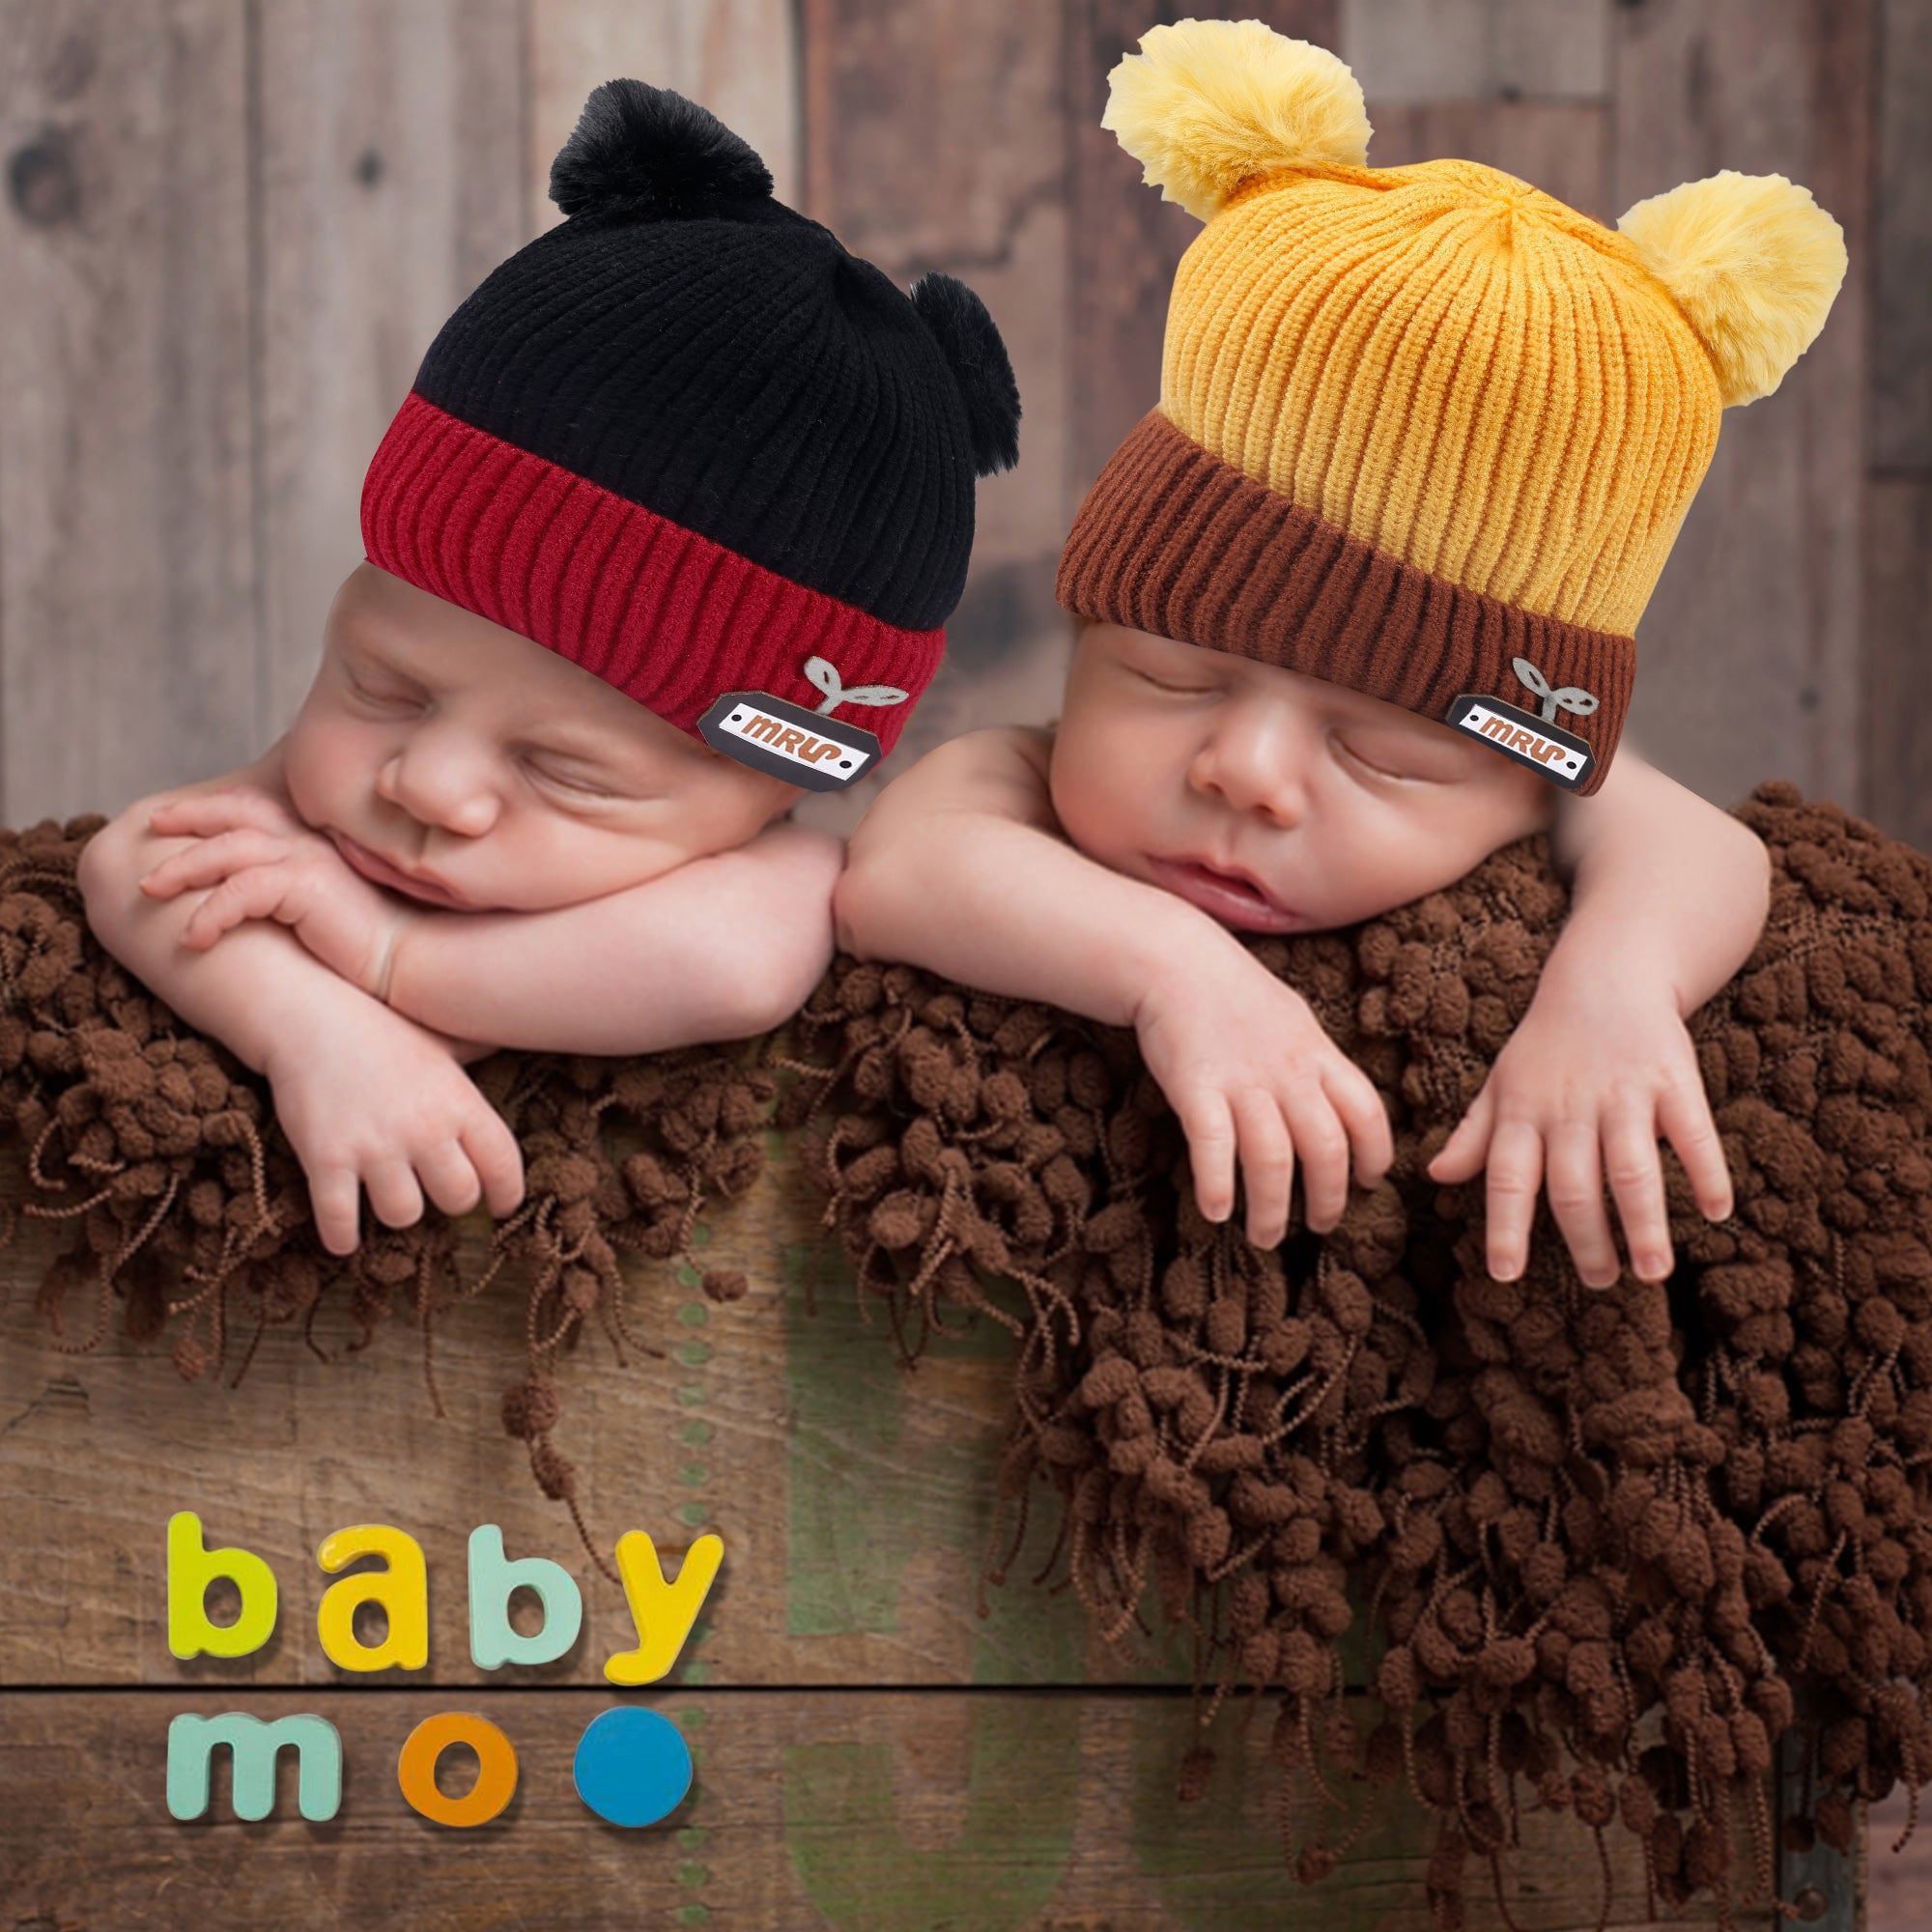 Baby Moo Pom Pom Black And Yellow 2 Pk Woolen Cap